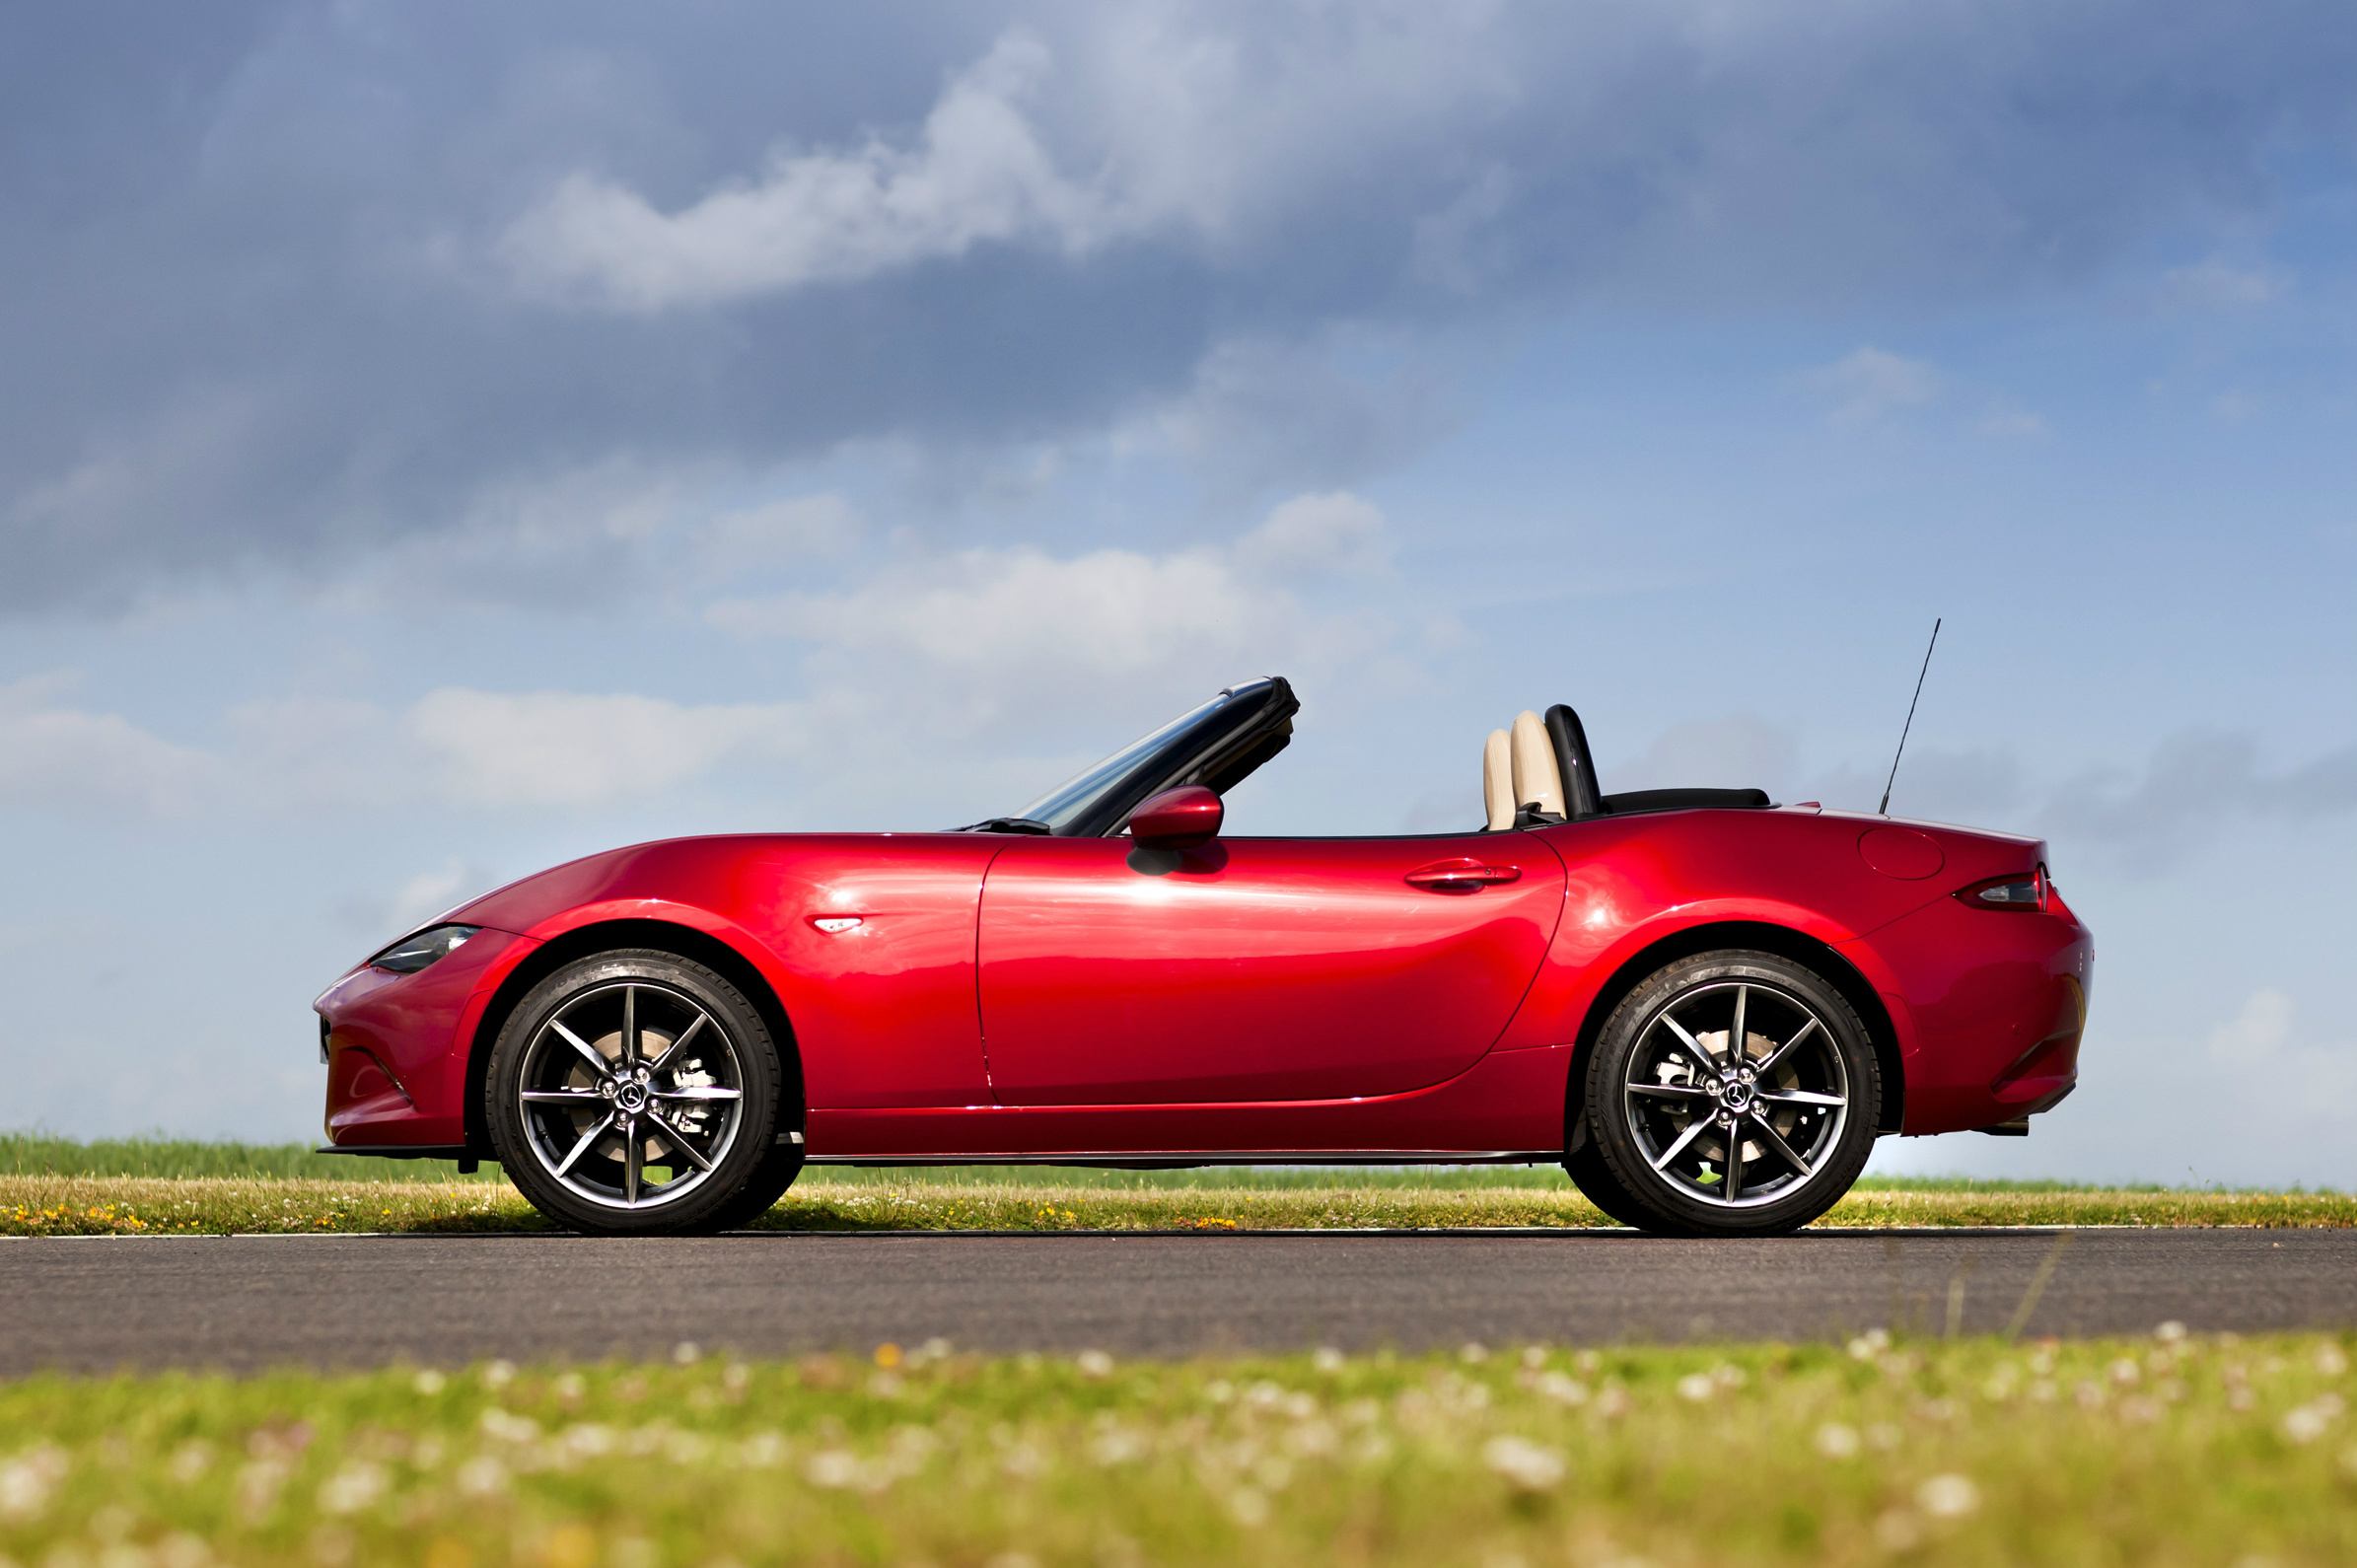 2015 all-new Mazda MX-5 summary of reviews from British media